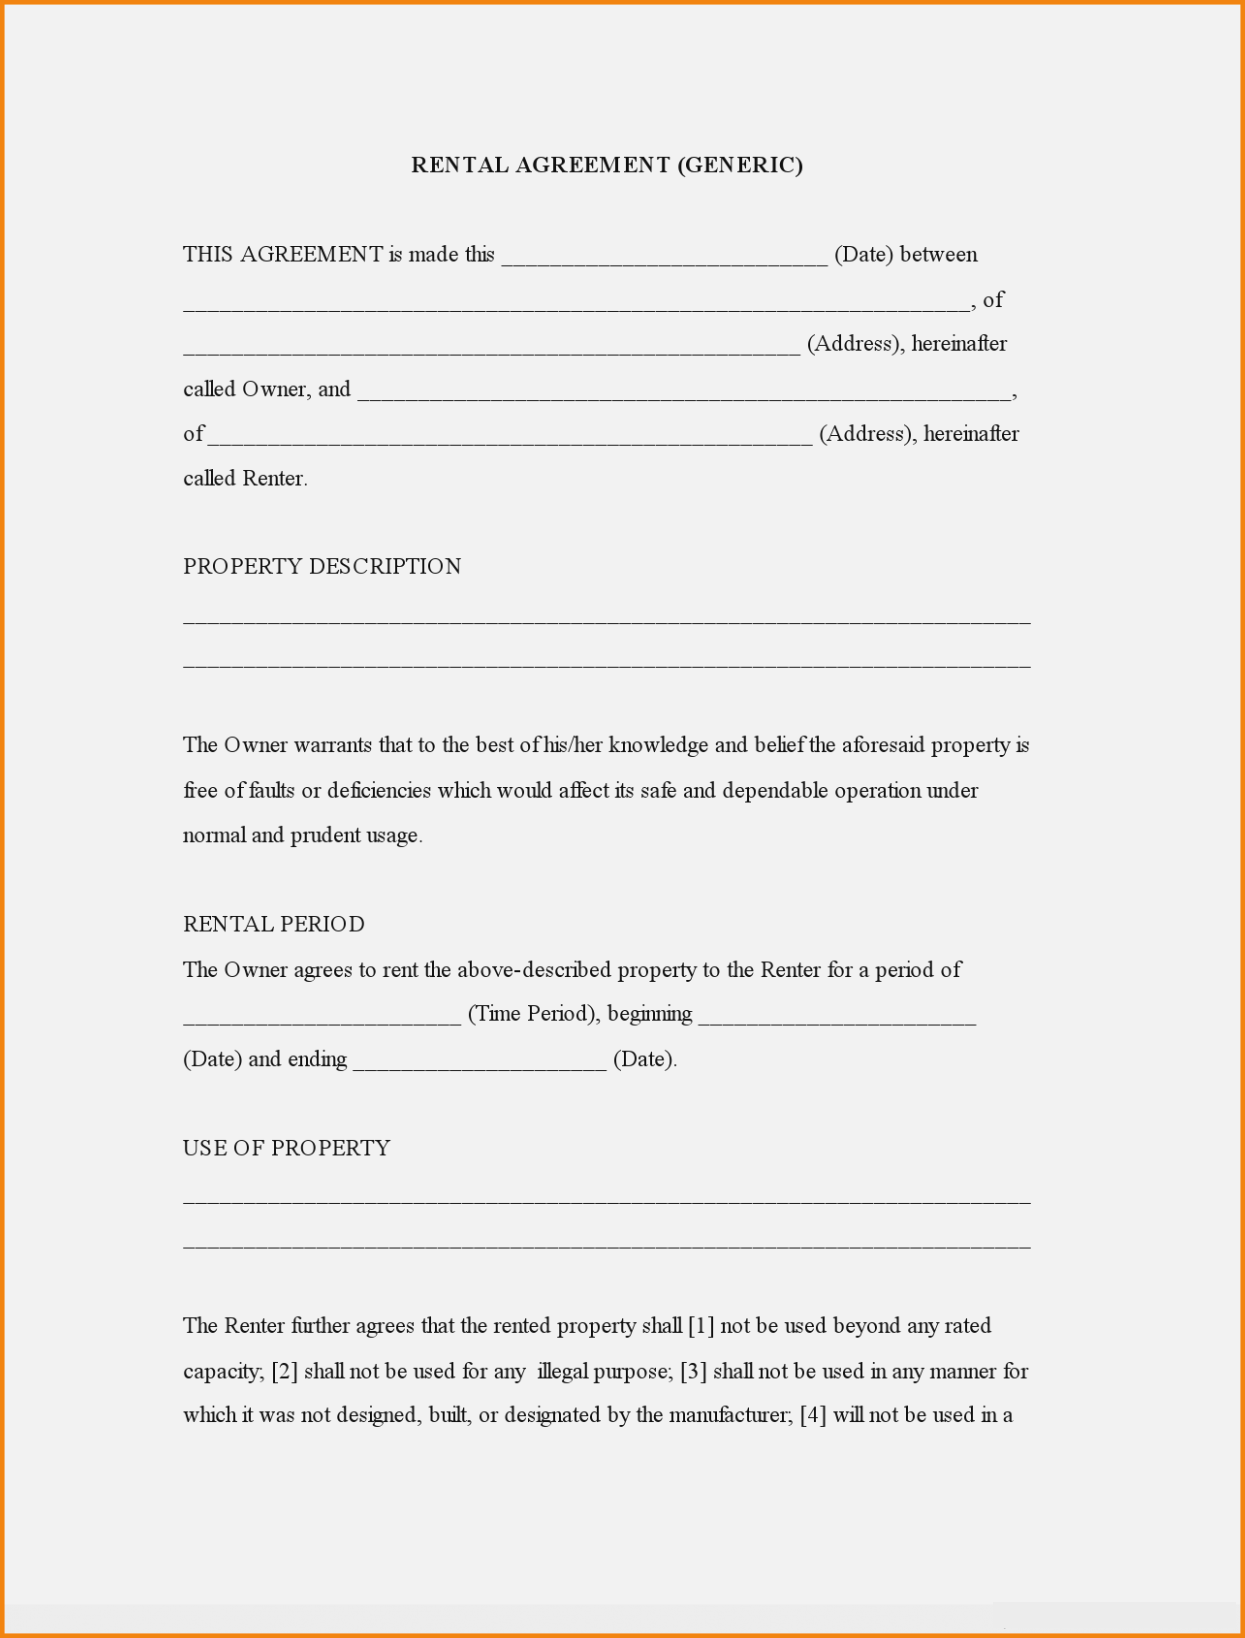 editable-rental-agreement-doctemplates